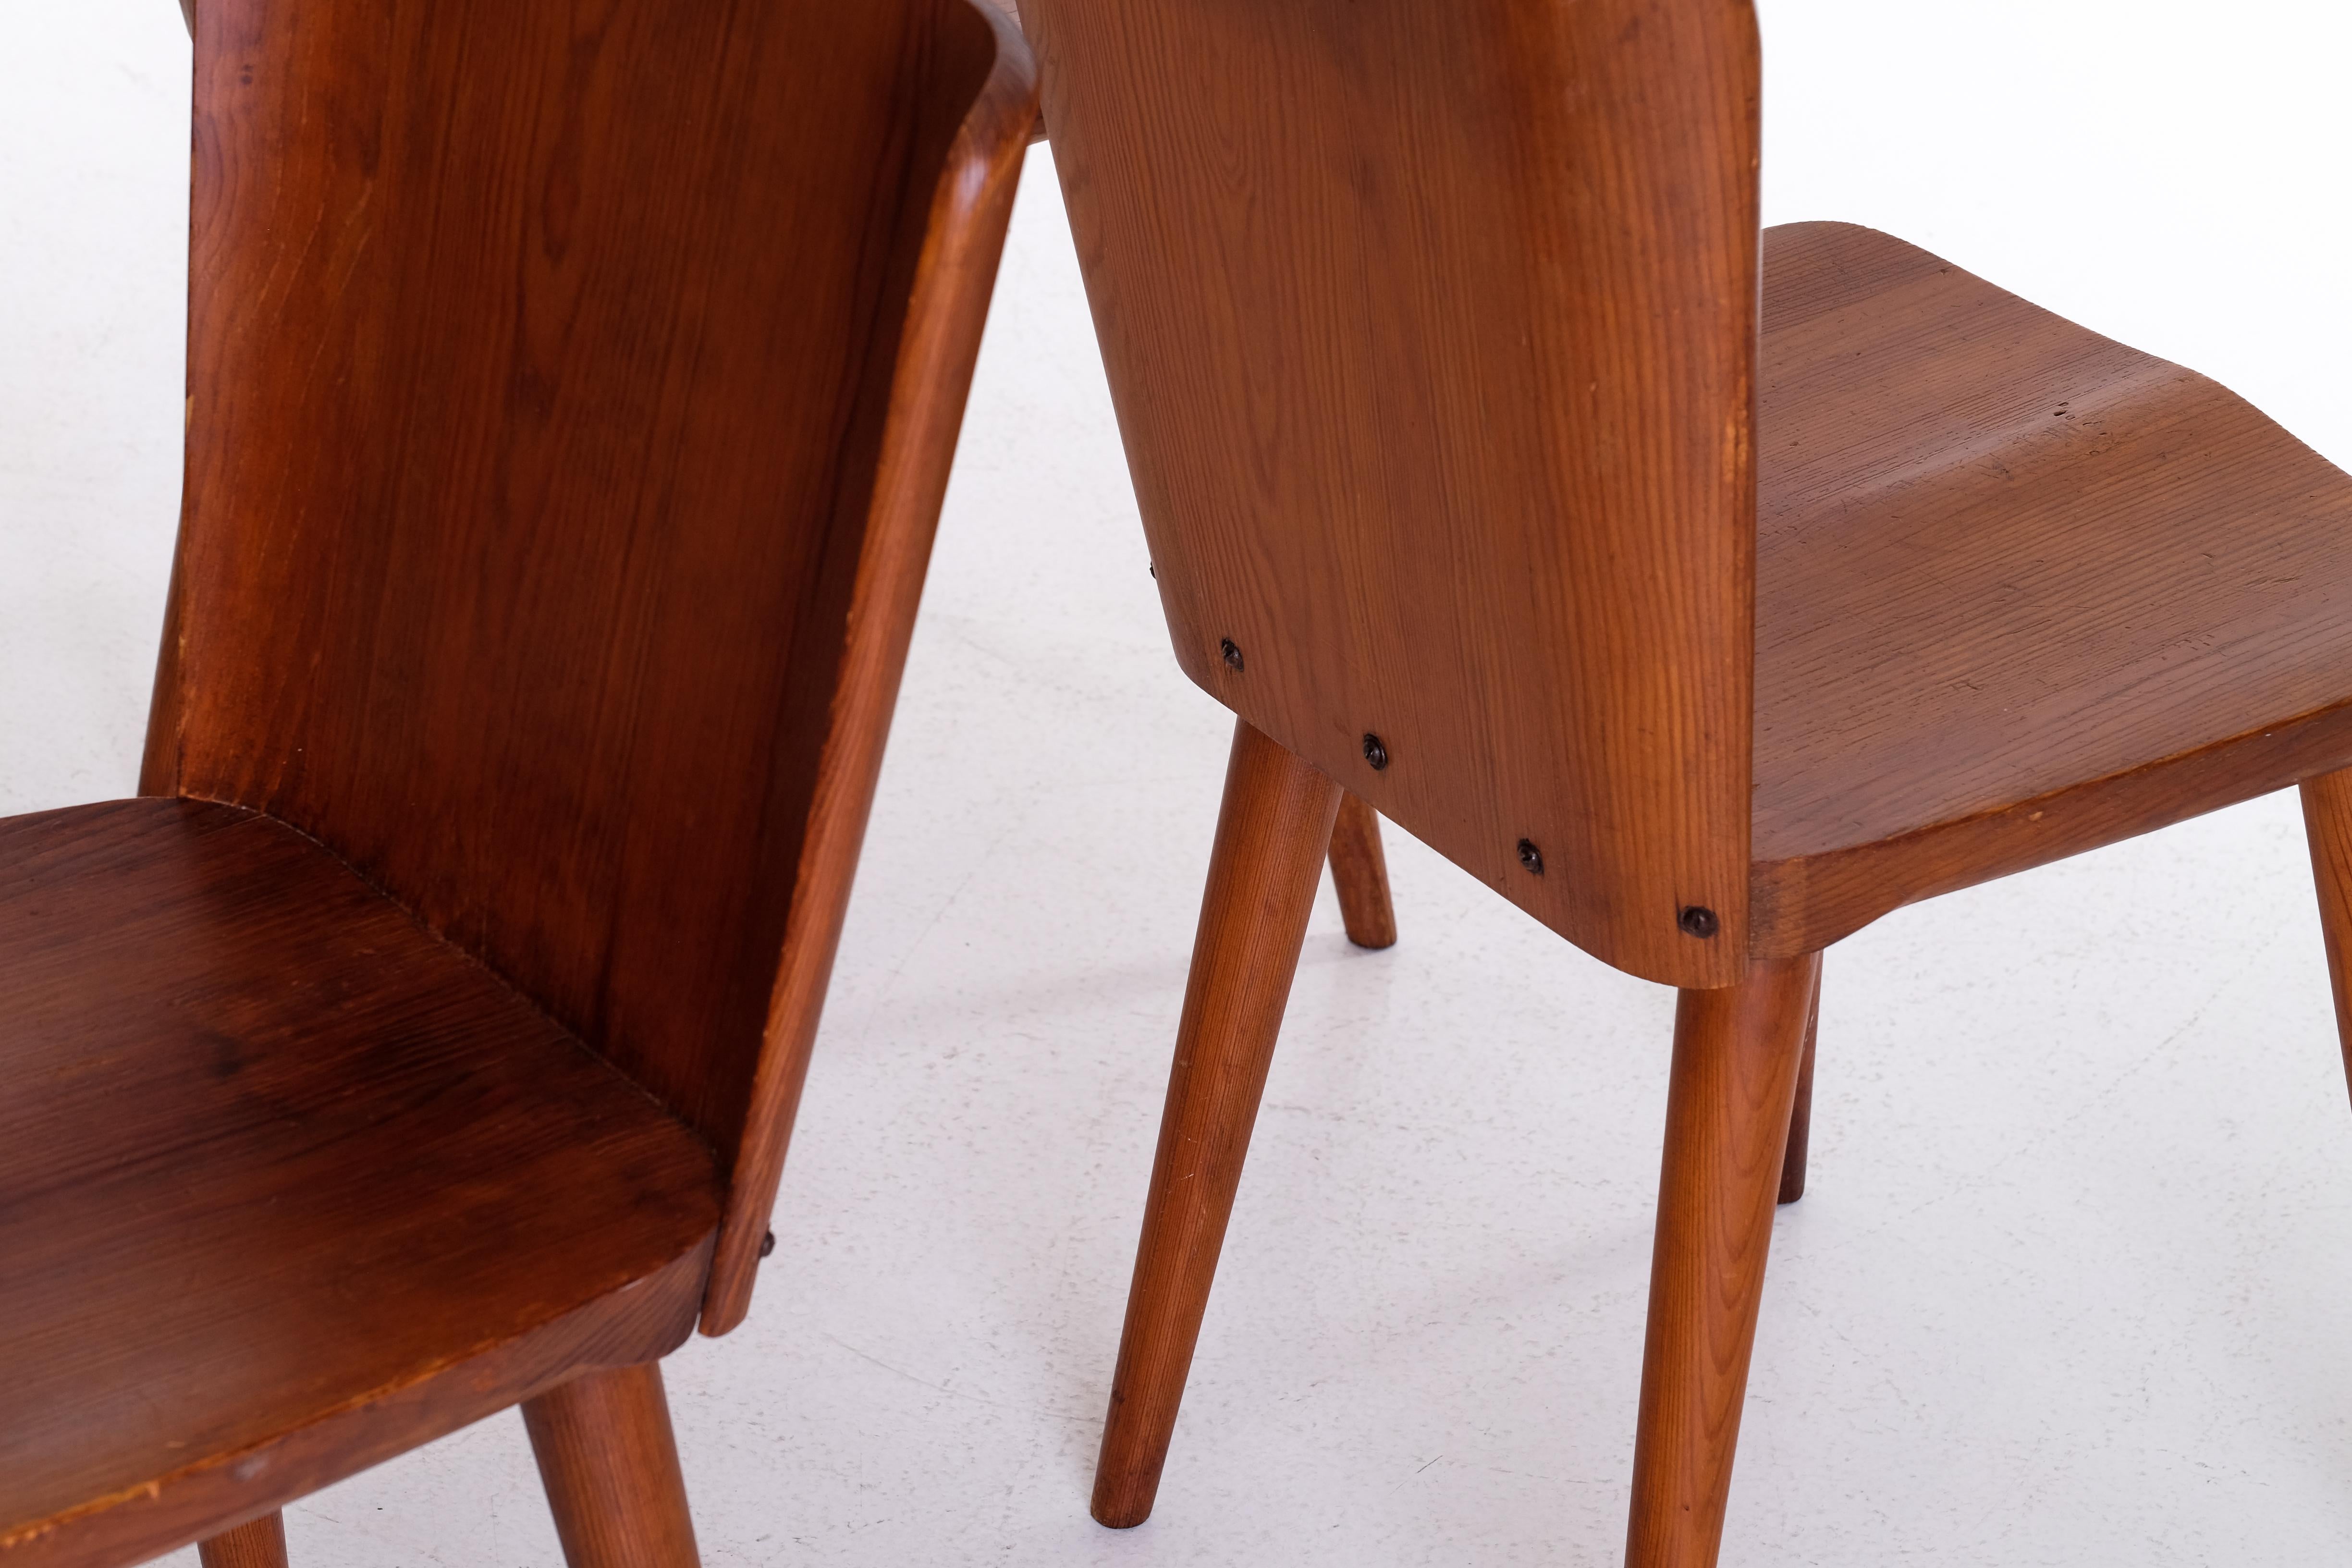 Set of 4 Swedish Pine Chairs by Göran Malmvall, Svensk Fur, 1960s For Sale 3